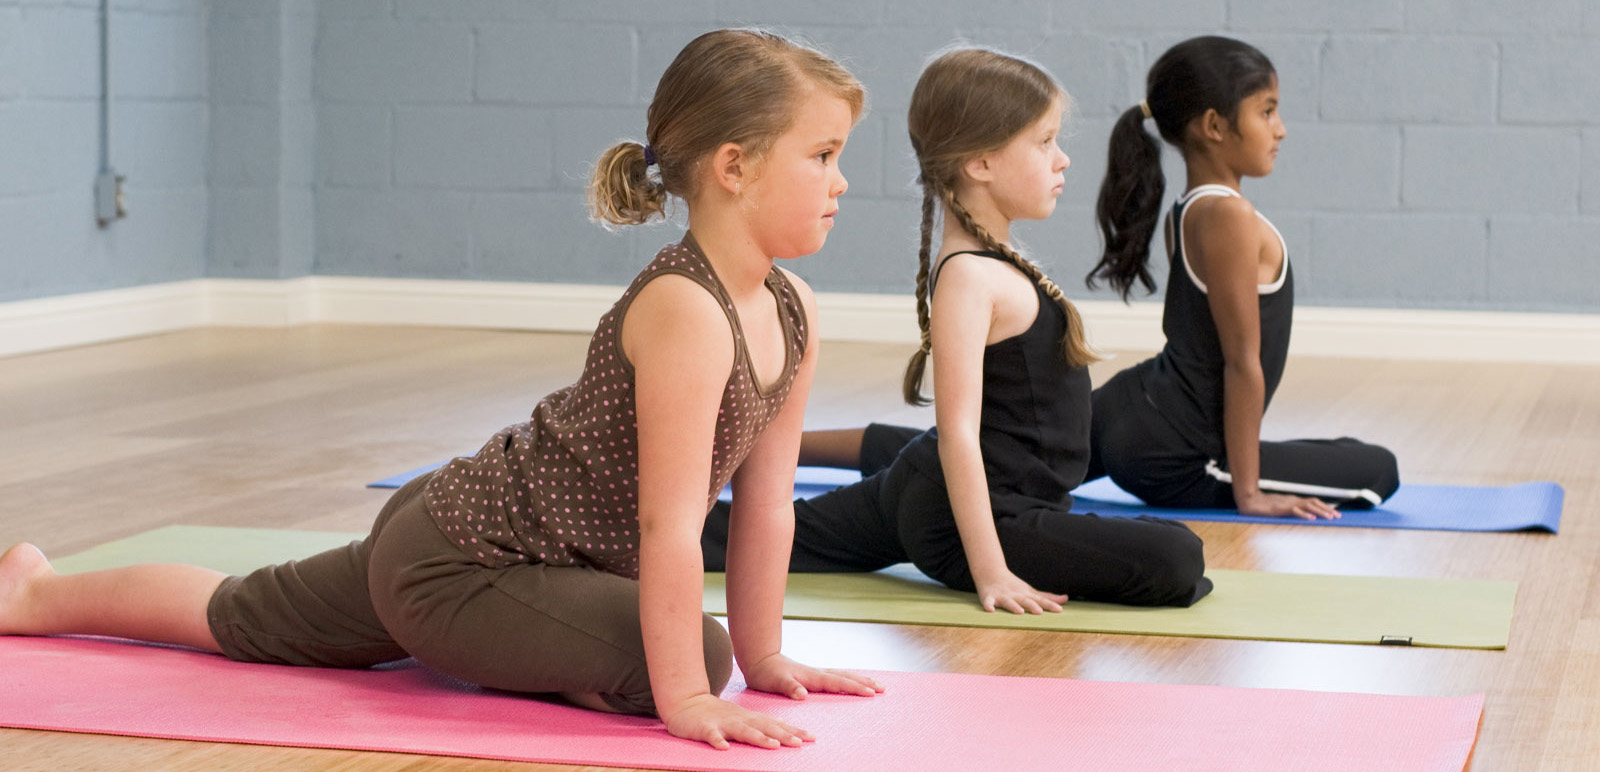 Yoga Poses For 2 Kids